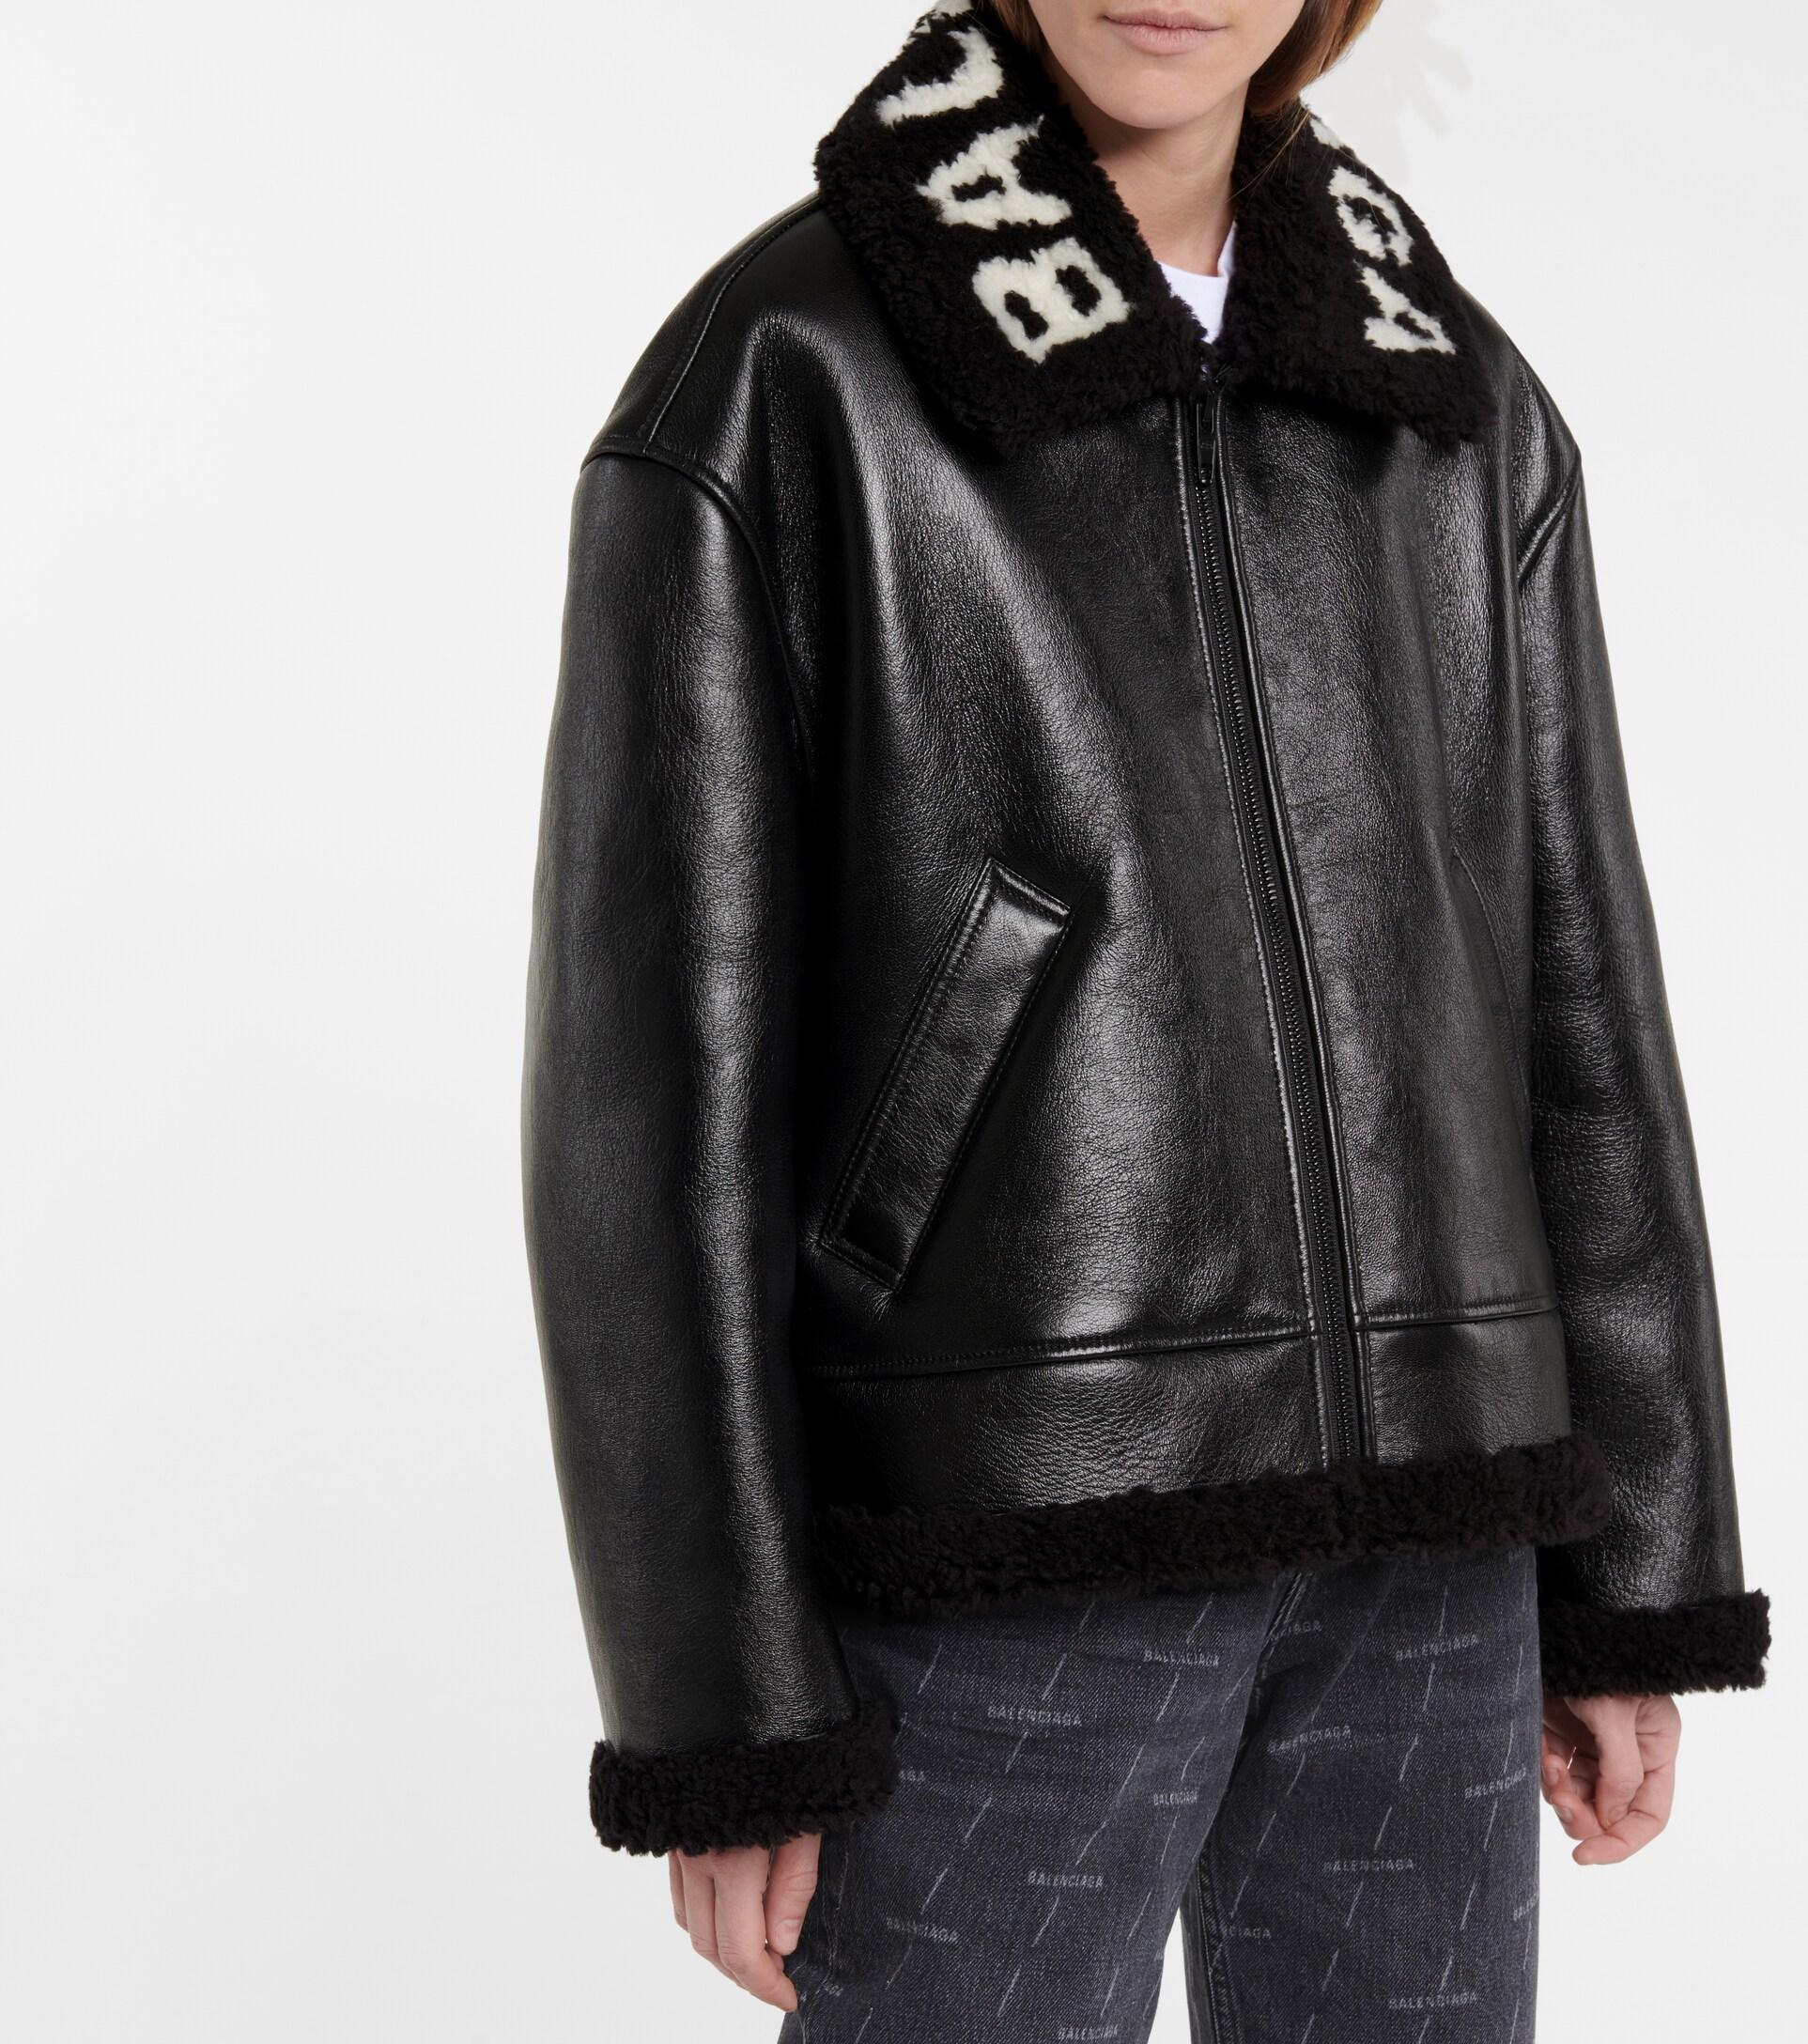 Balenciaga Cocoon Shearling Jacket in Black/White (Black) - Save 63% | Lyst